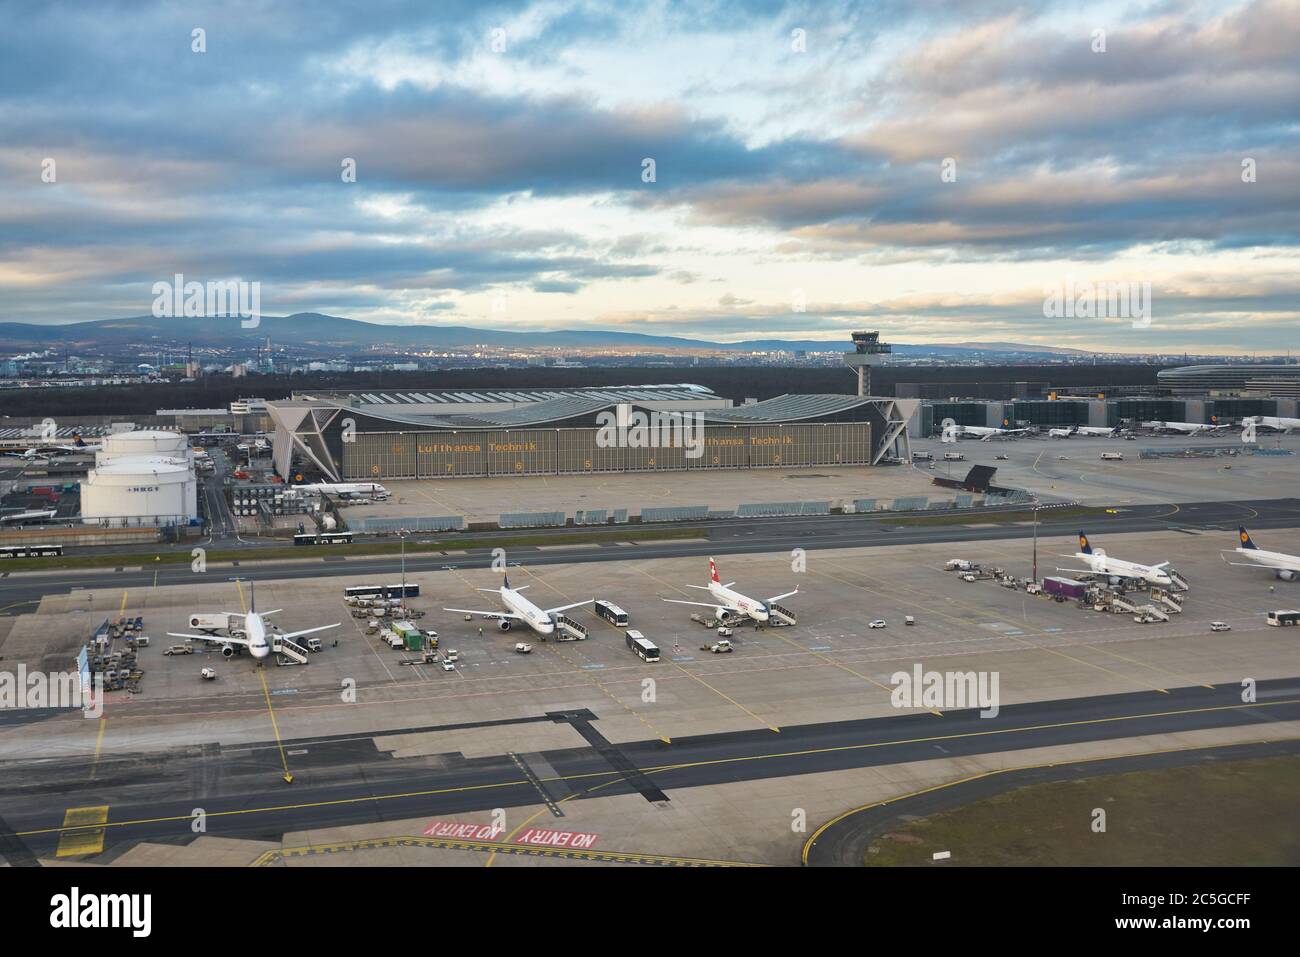 FRANCOFORTE AM MAIN, GERMANIA - CIRCA GENNAIO 2020: Vista dell'aeroporto di Francoforte sul meno. Foto Stock